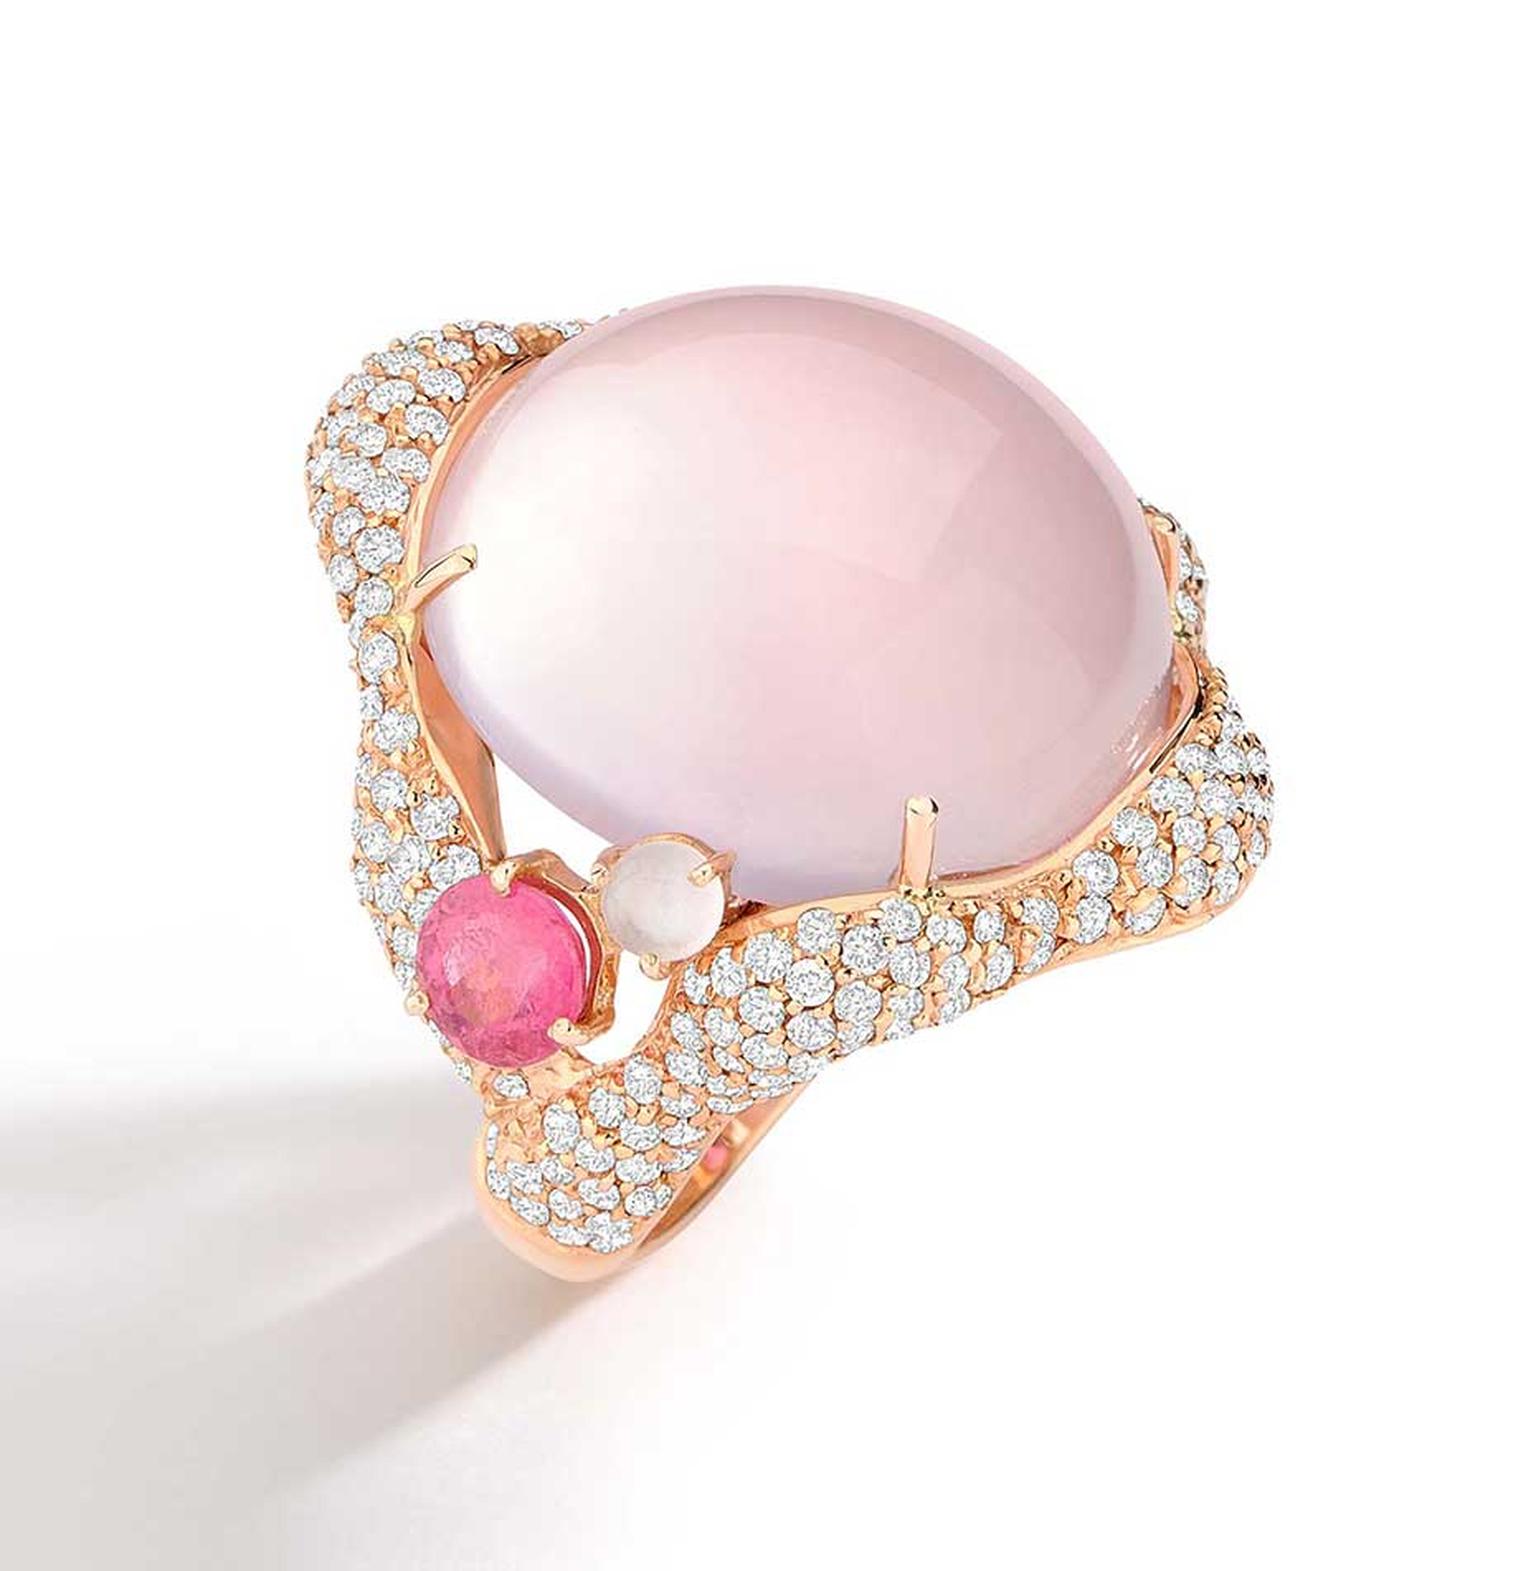 Brumani Baobab Rose collection ring in rose gold with diamonds, rose quartz and pink tourmaline